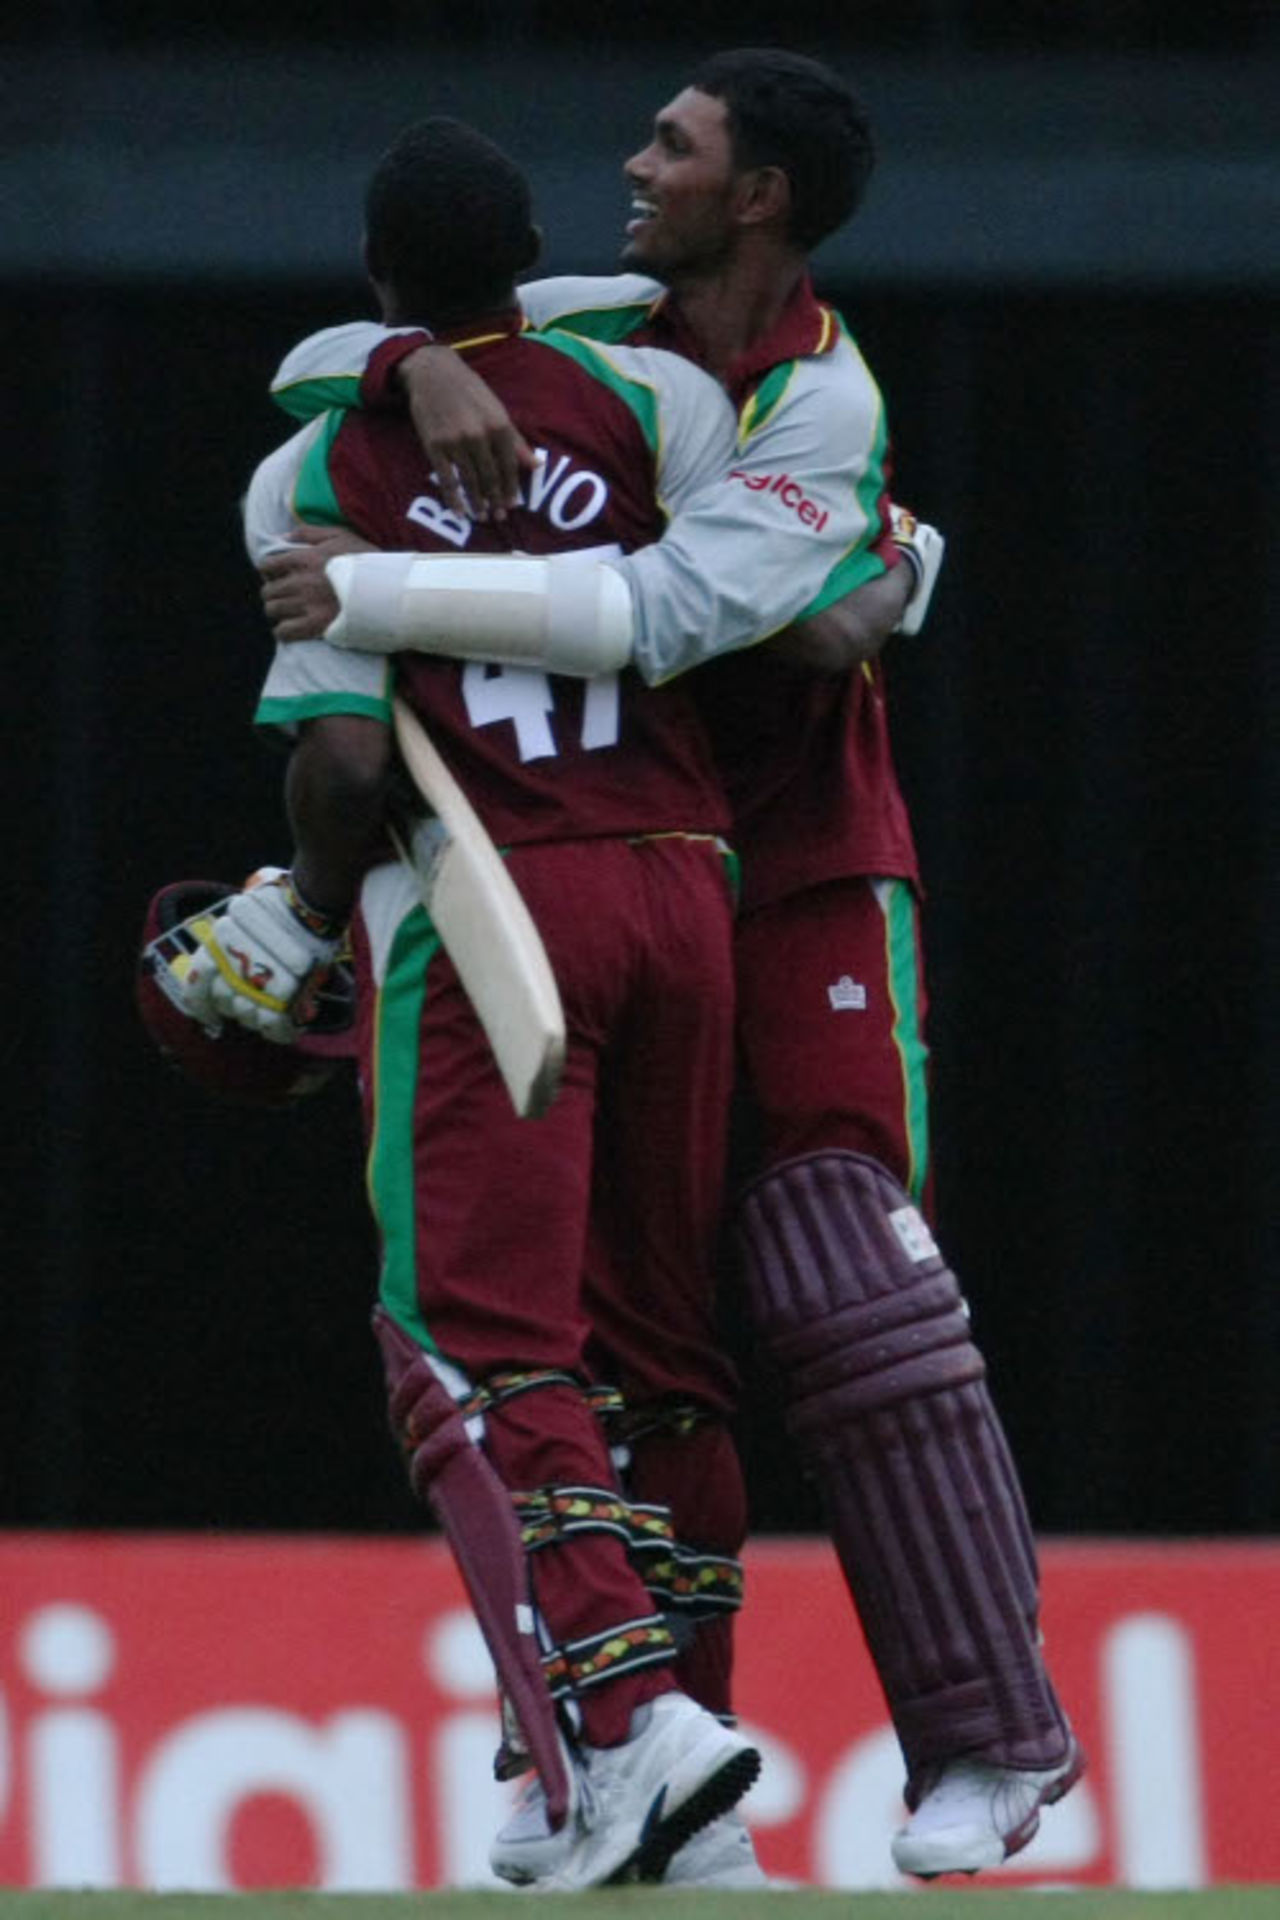 Denesh Ramdim gives Dwayne Bravo a high aftter West Indies' win, West Indies v Australia, Twenty20, Barbados, June 20, 2008